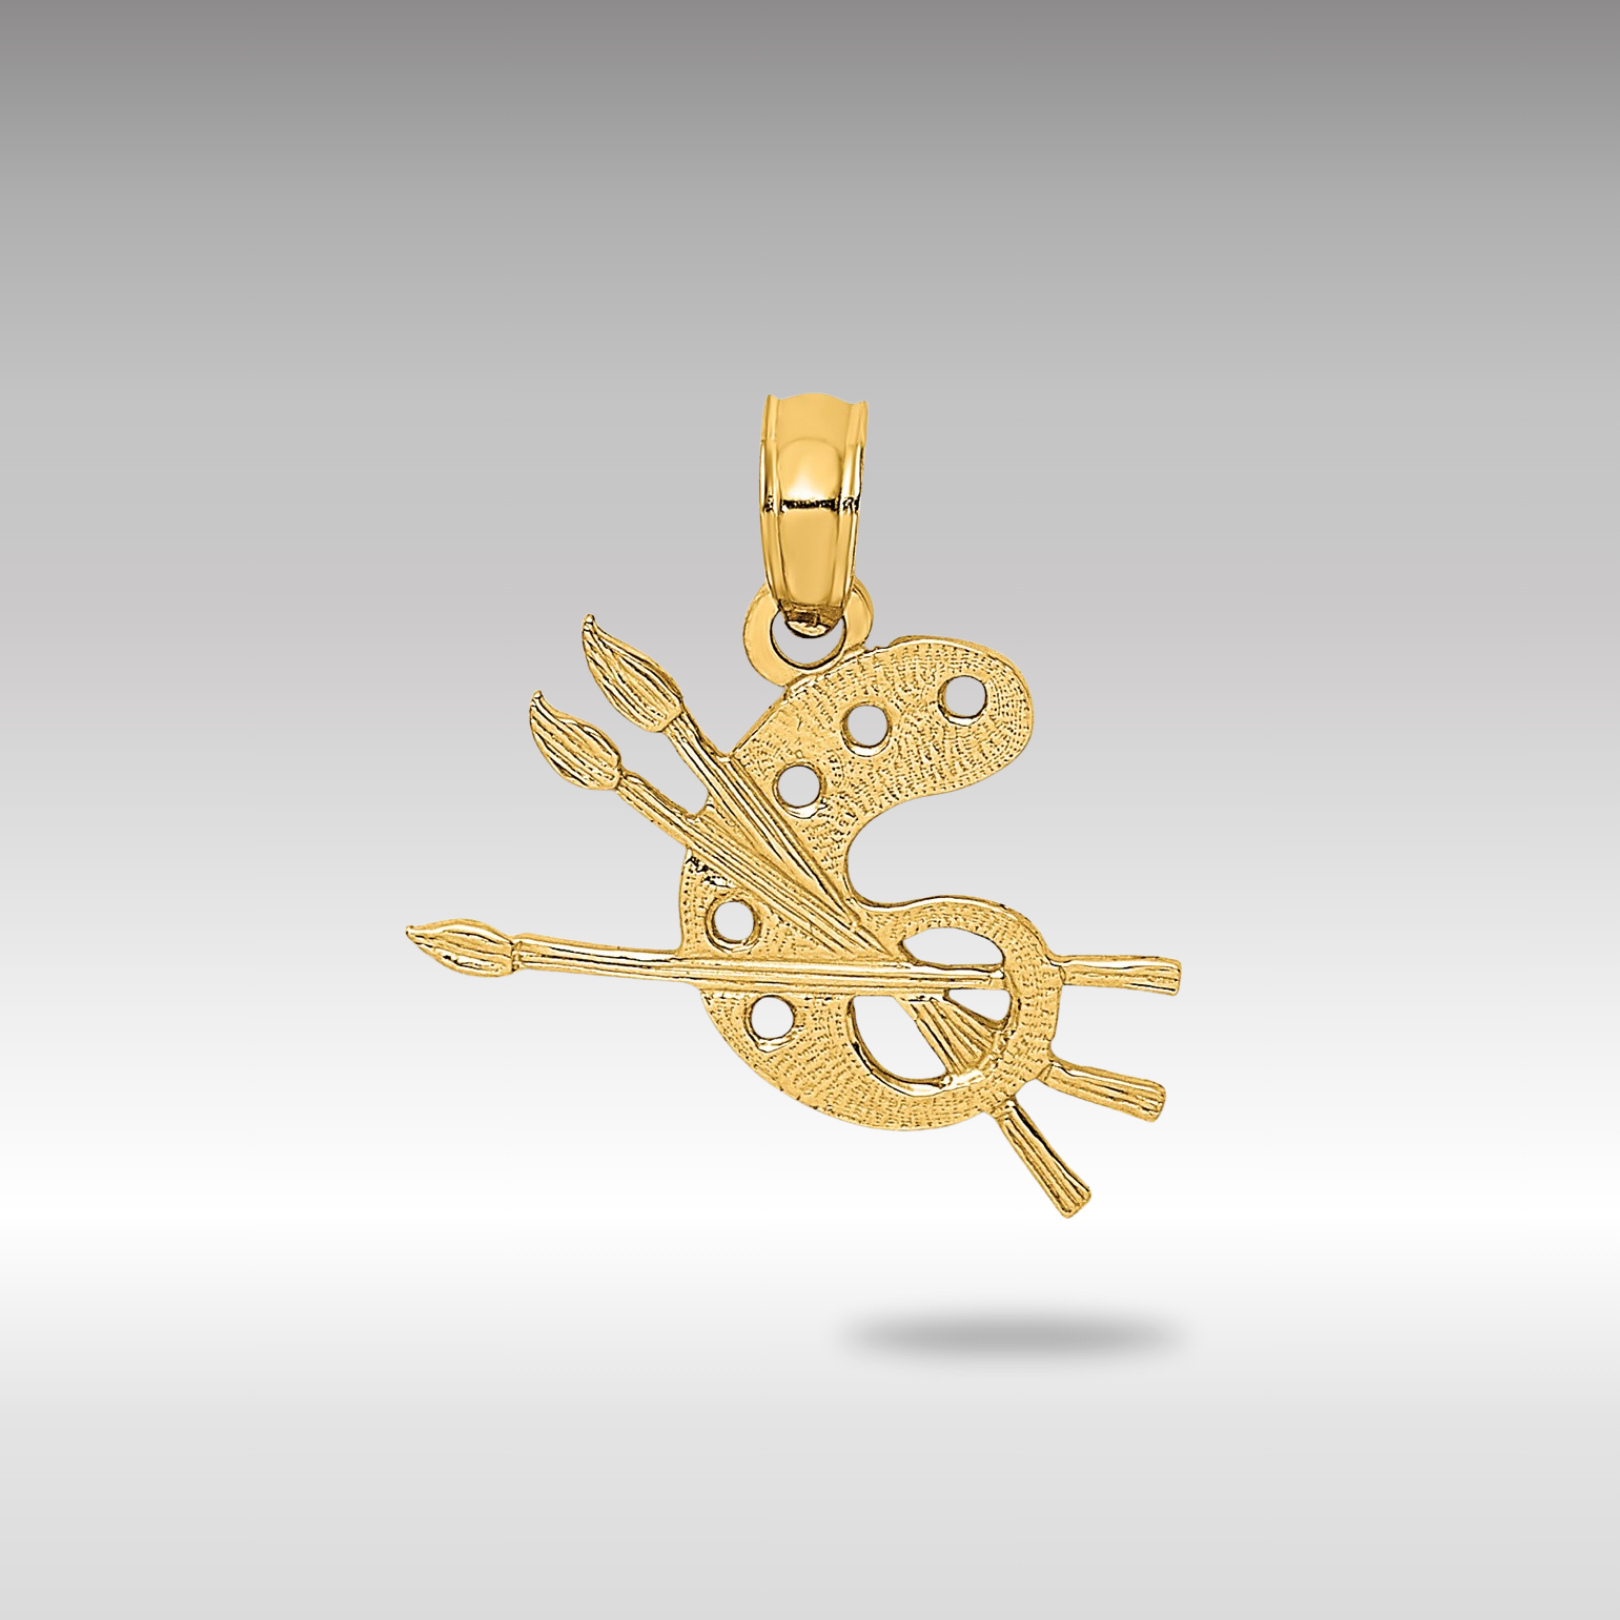 Gold Paint Palette Necklace Pendant - Charlie & Co. Jewelry